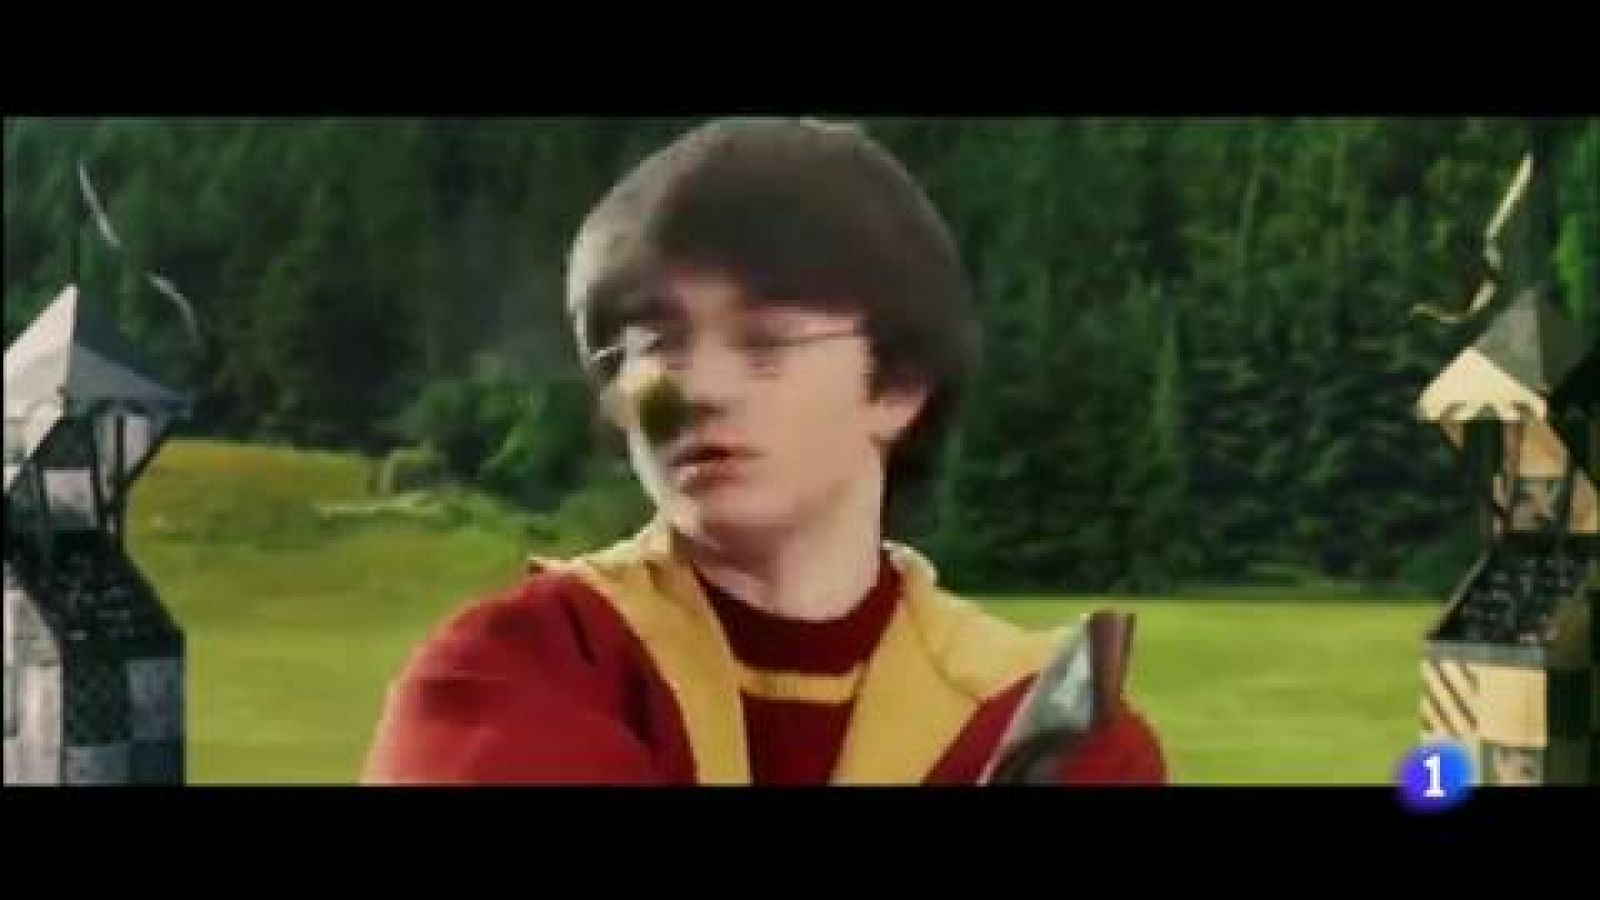 El Quidditch, el deporte de Harry Potter, ya es real. 